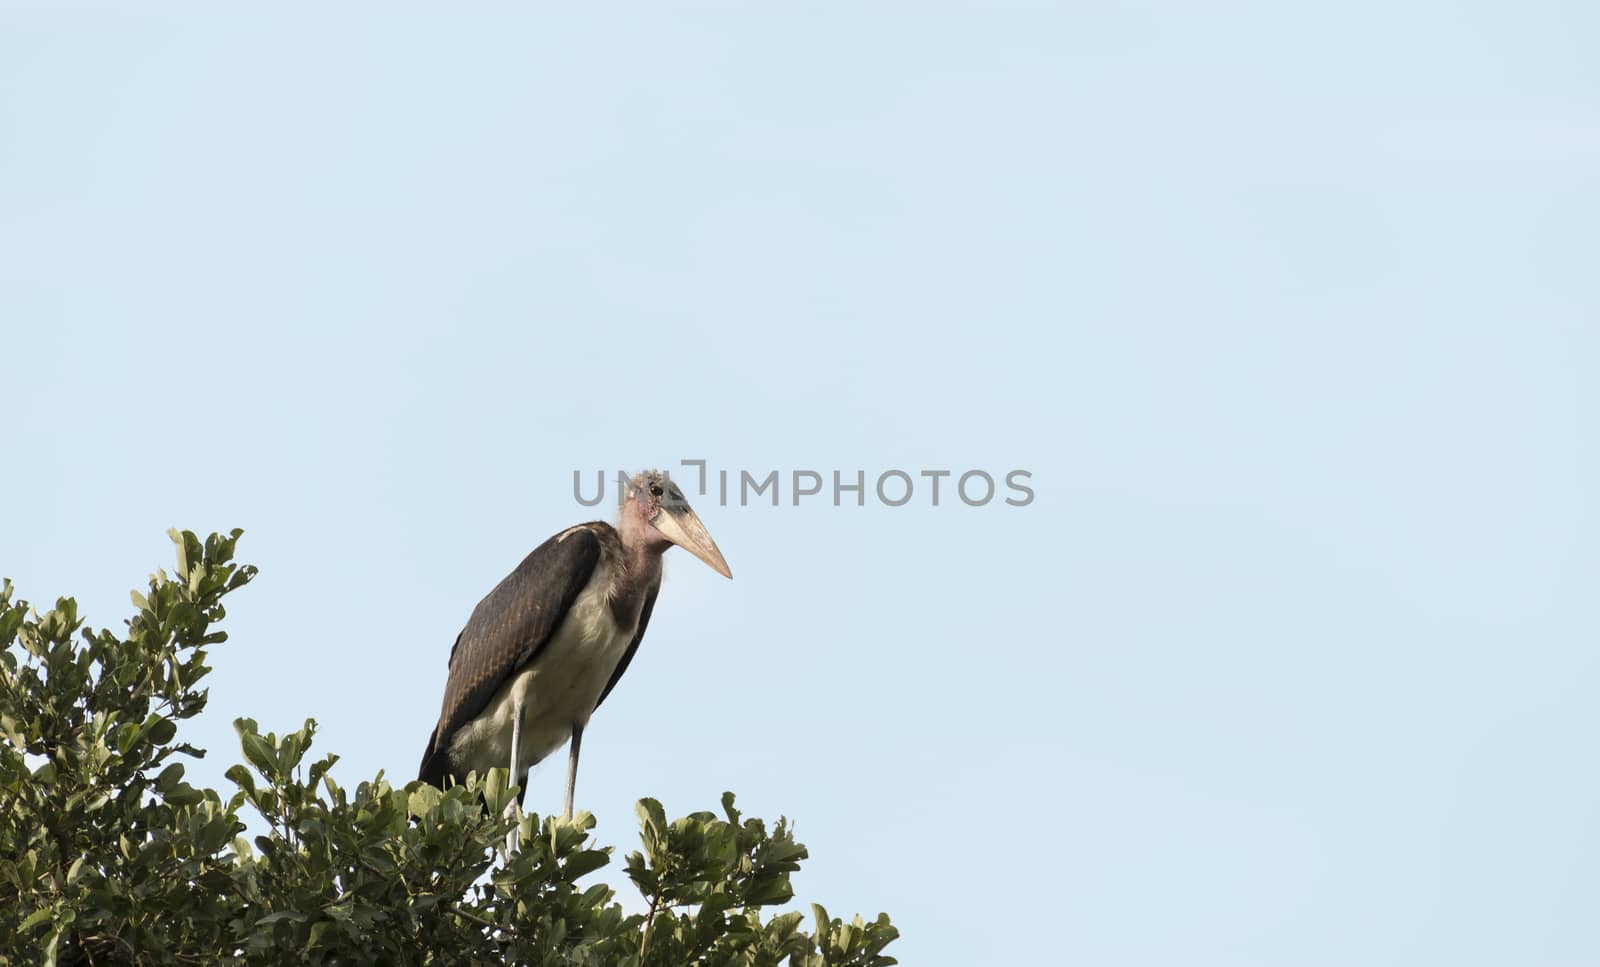 marabou bird by compuinfoto